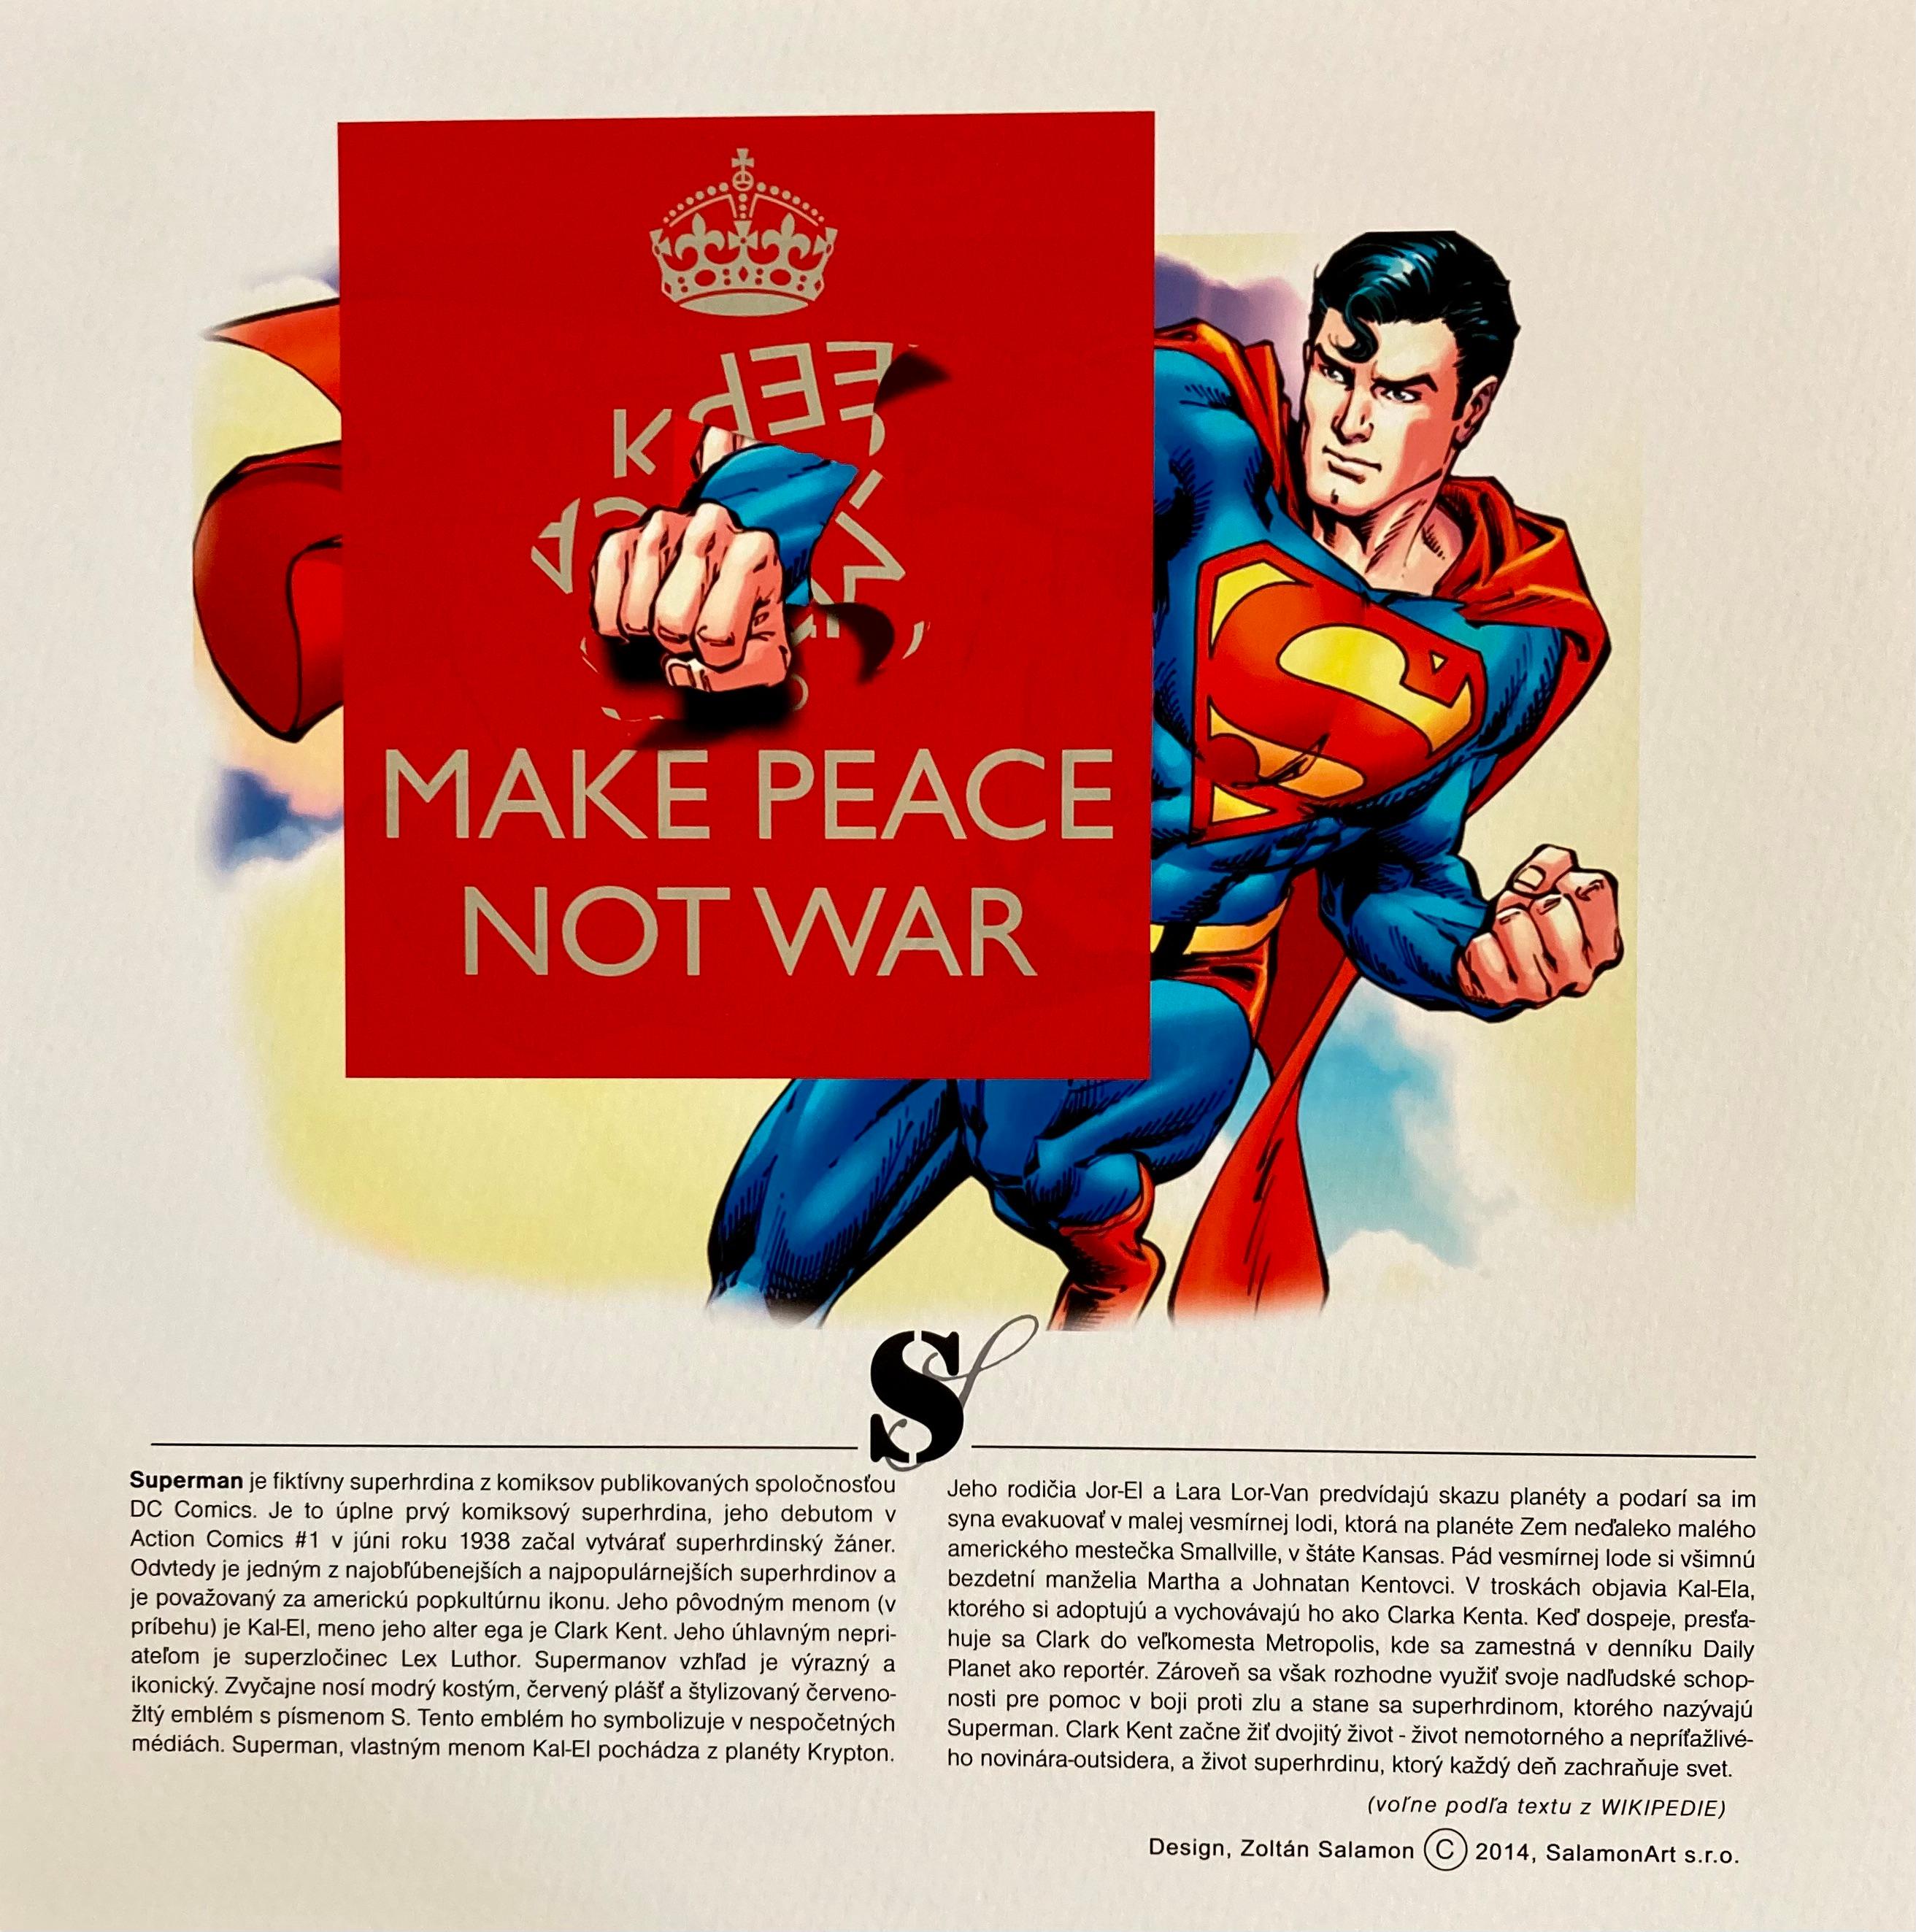 Zoltán Salamon Abstract Print - "S" Superman / Fine Art Print / Limited 